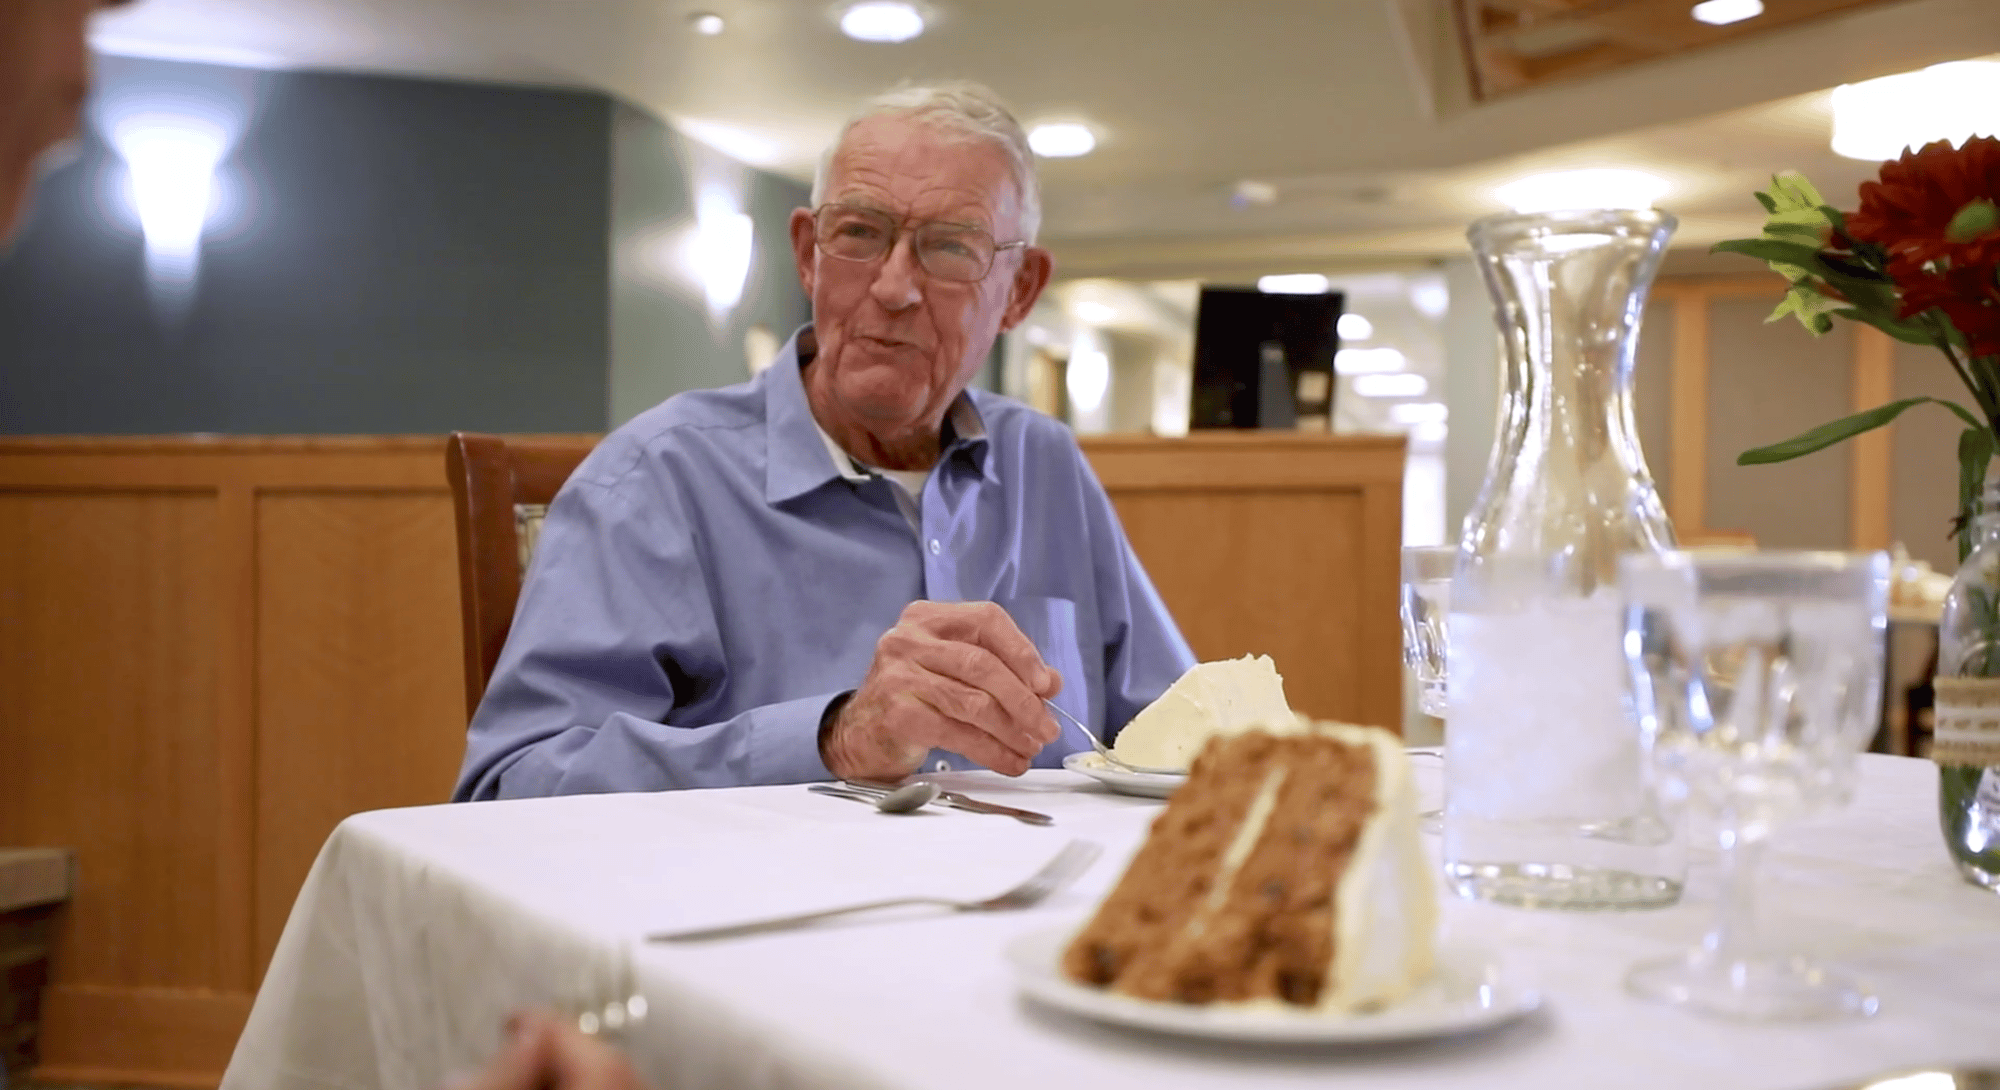 Senior man enjoying food at the table